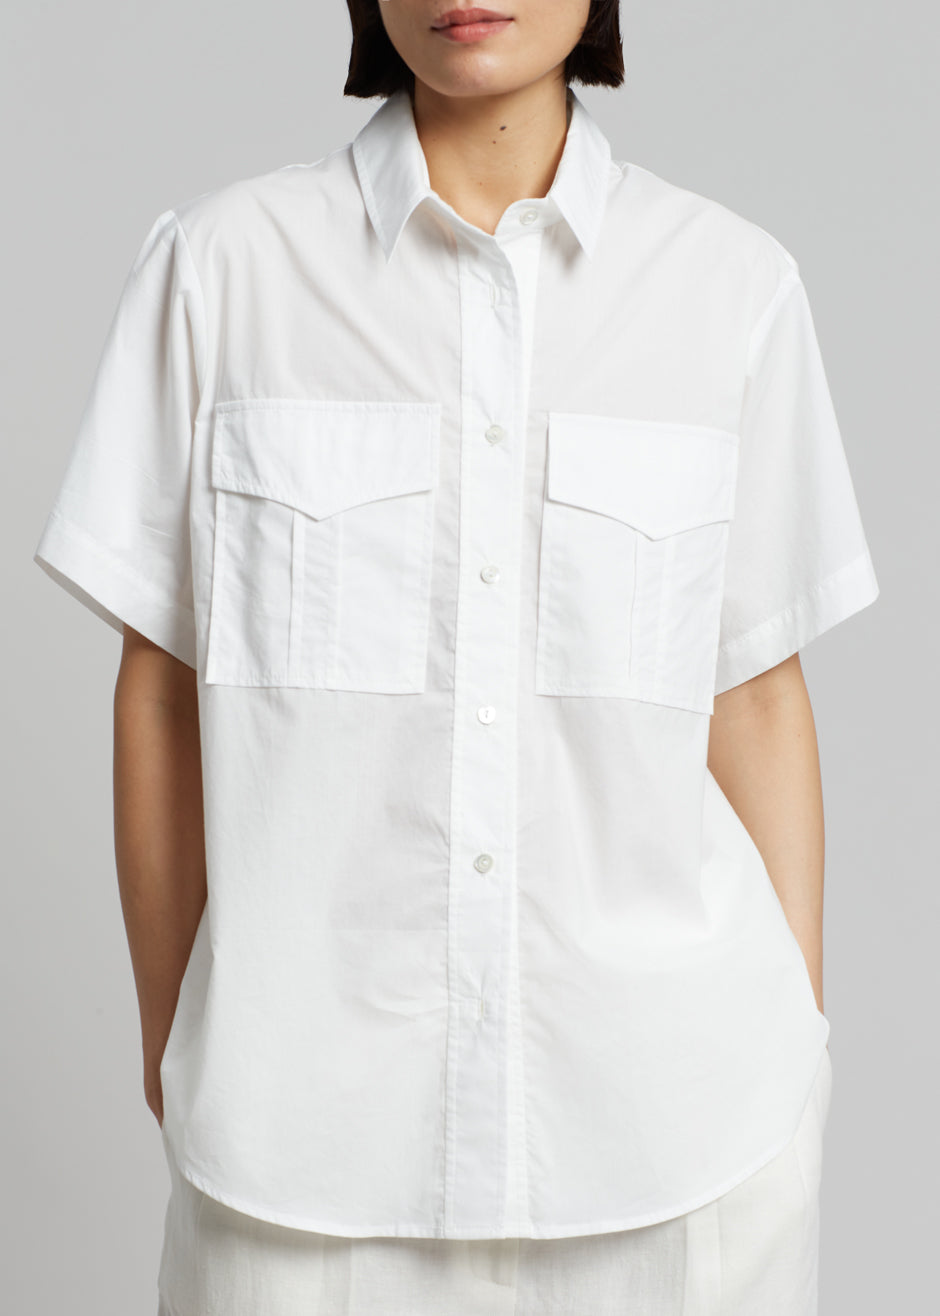 MATIN Short Sleeve Pocket Shirt - White - 2